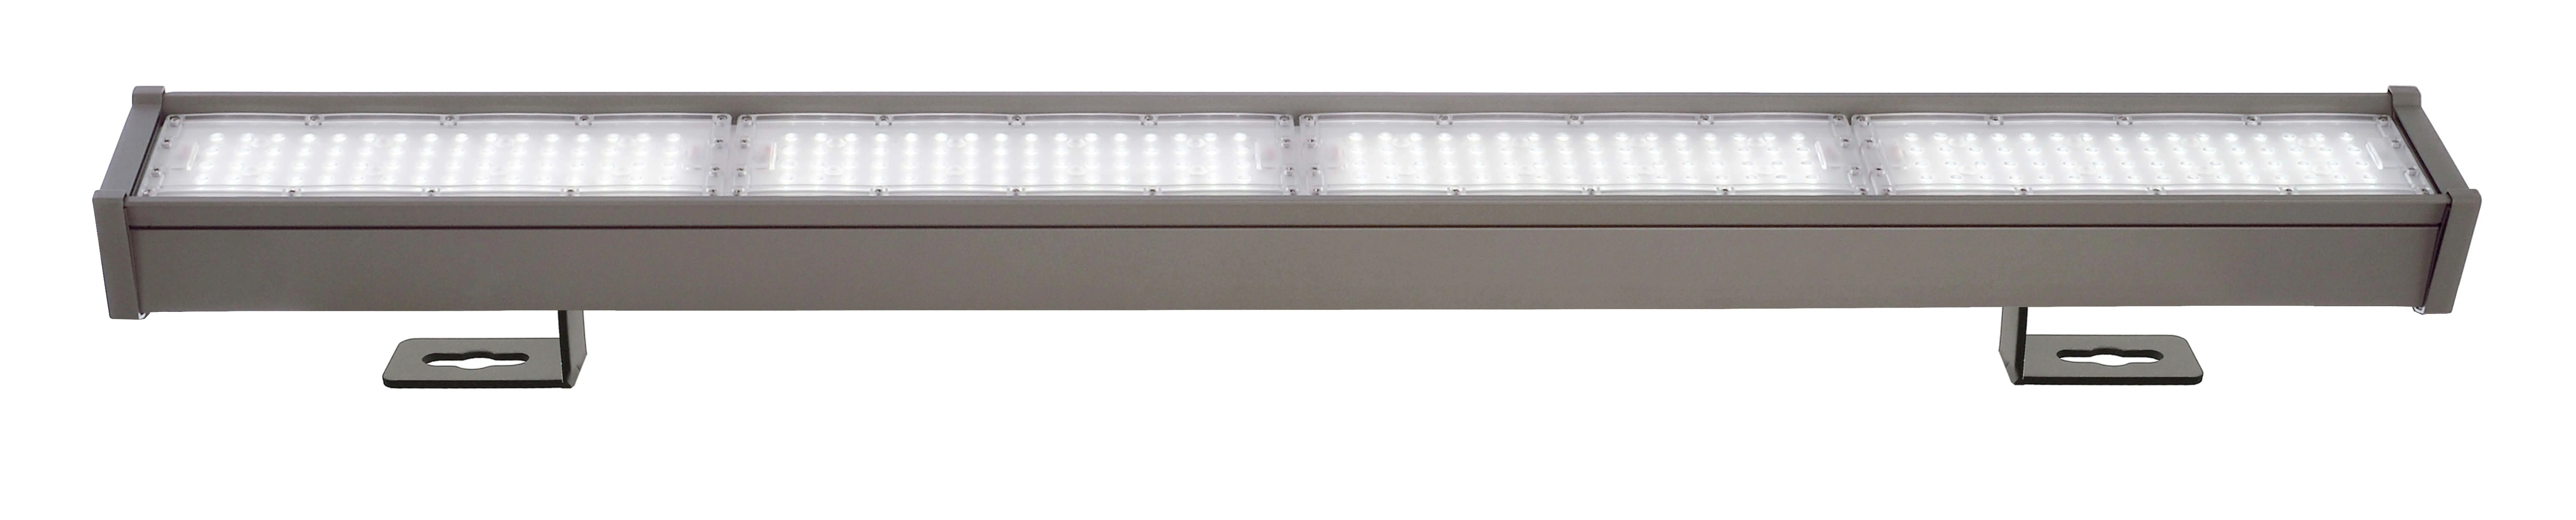 Highbay Normae LED Strahler DALI IP65 5000K 172W, 121,9cm